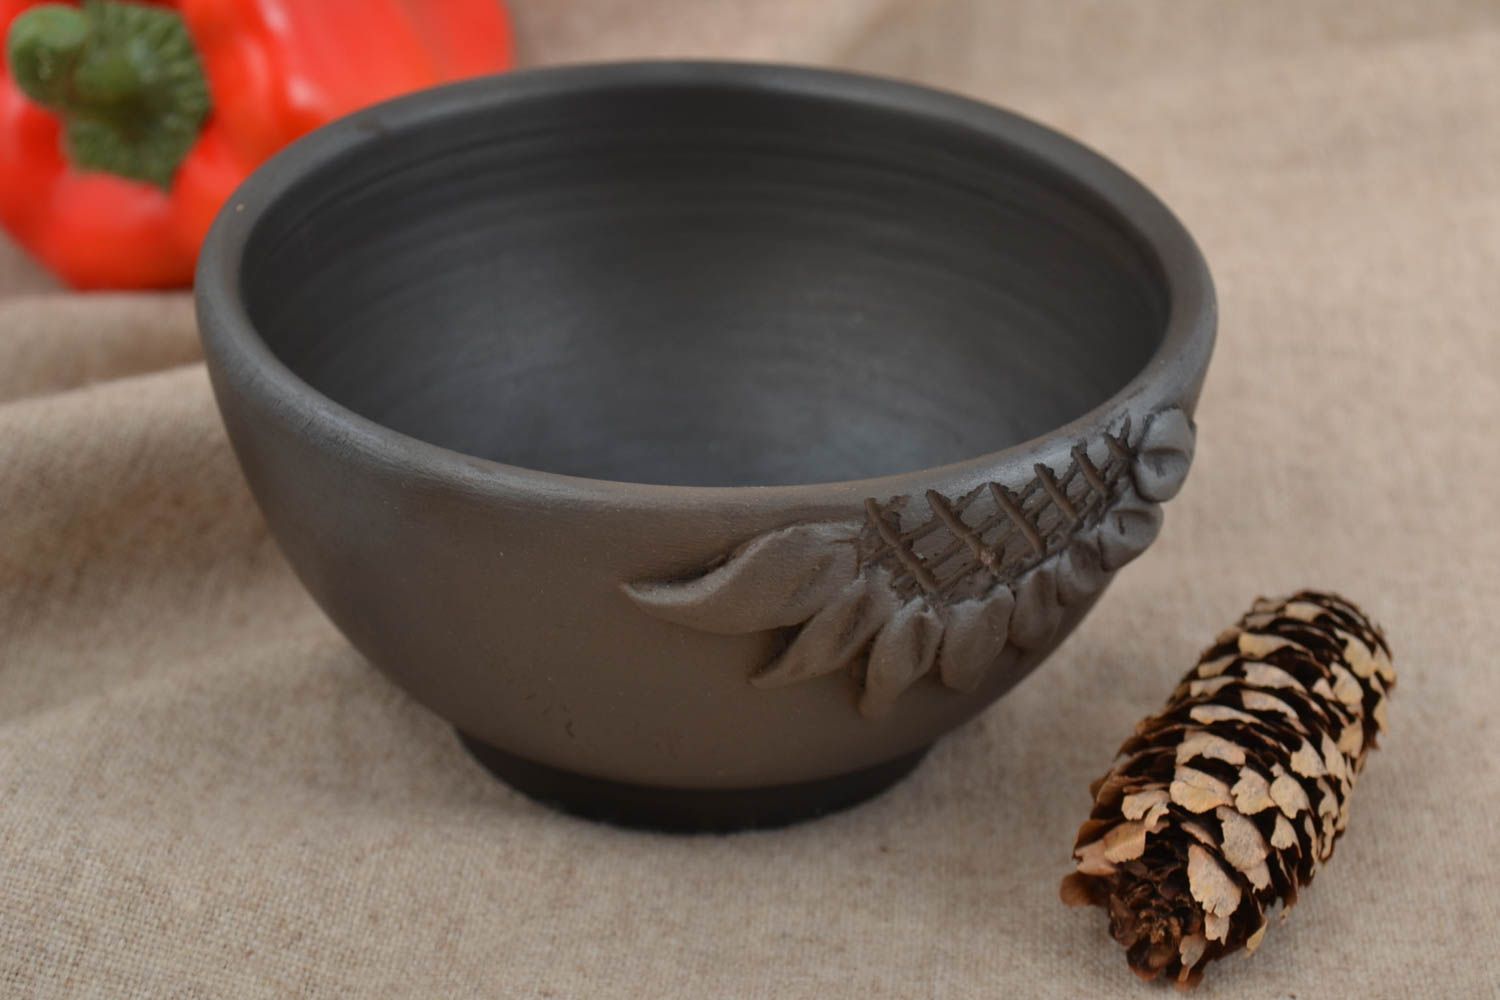 15 oz cereal ceramic handmade bowl in brown color 0,7 lb photo 1